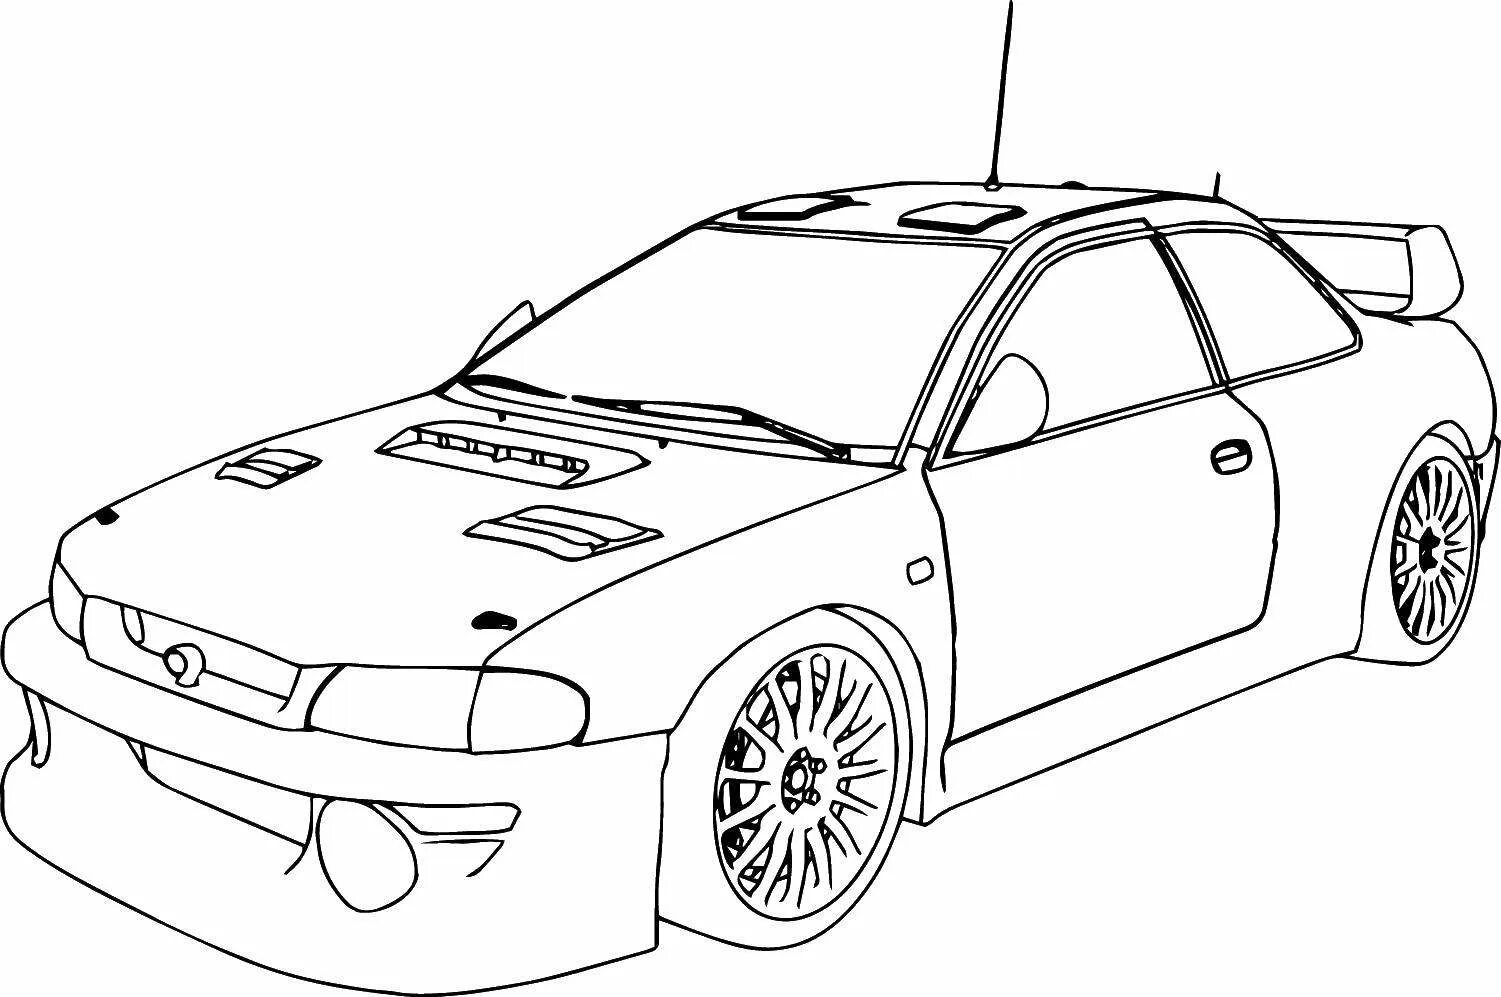 Subaru WRX STI раскраска. Раскраска Субару Импреза. Раскраска Subaru Impreza WRX STI. Субару WRX STI раскраска. Раскраски про машинки